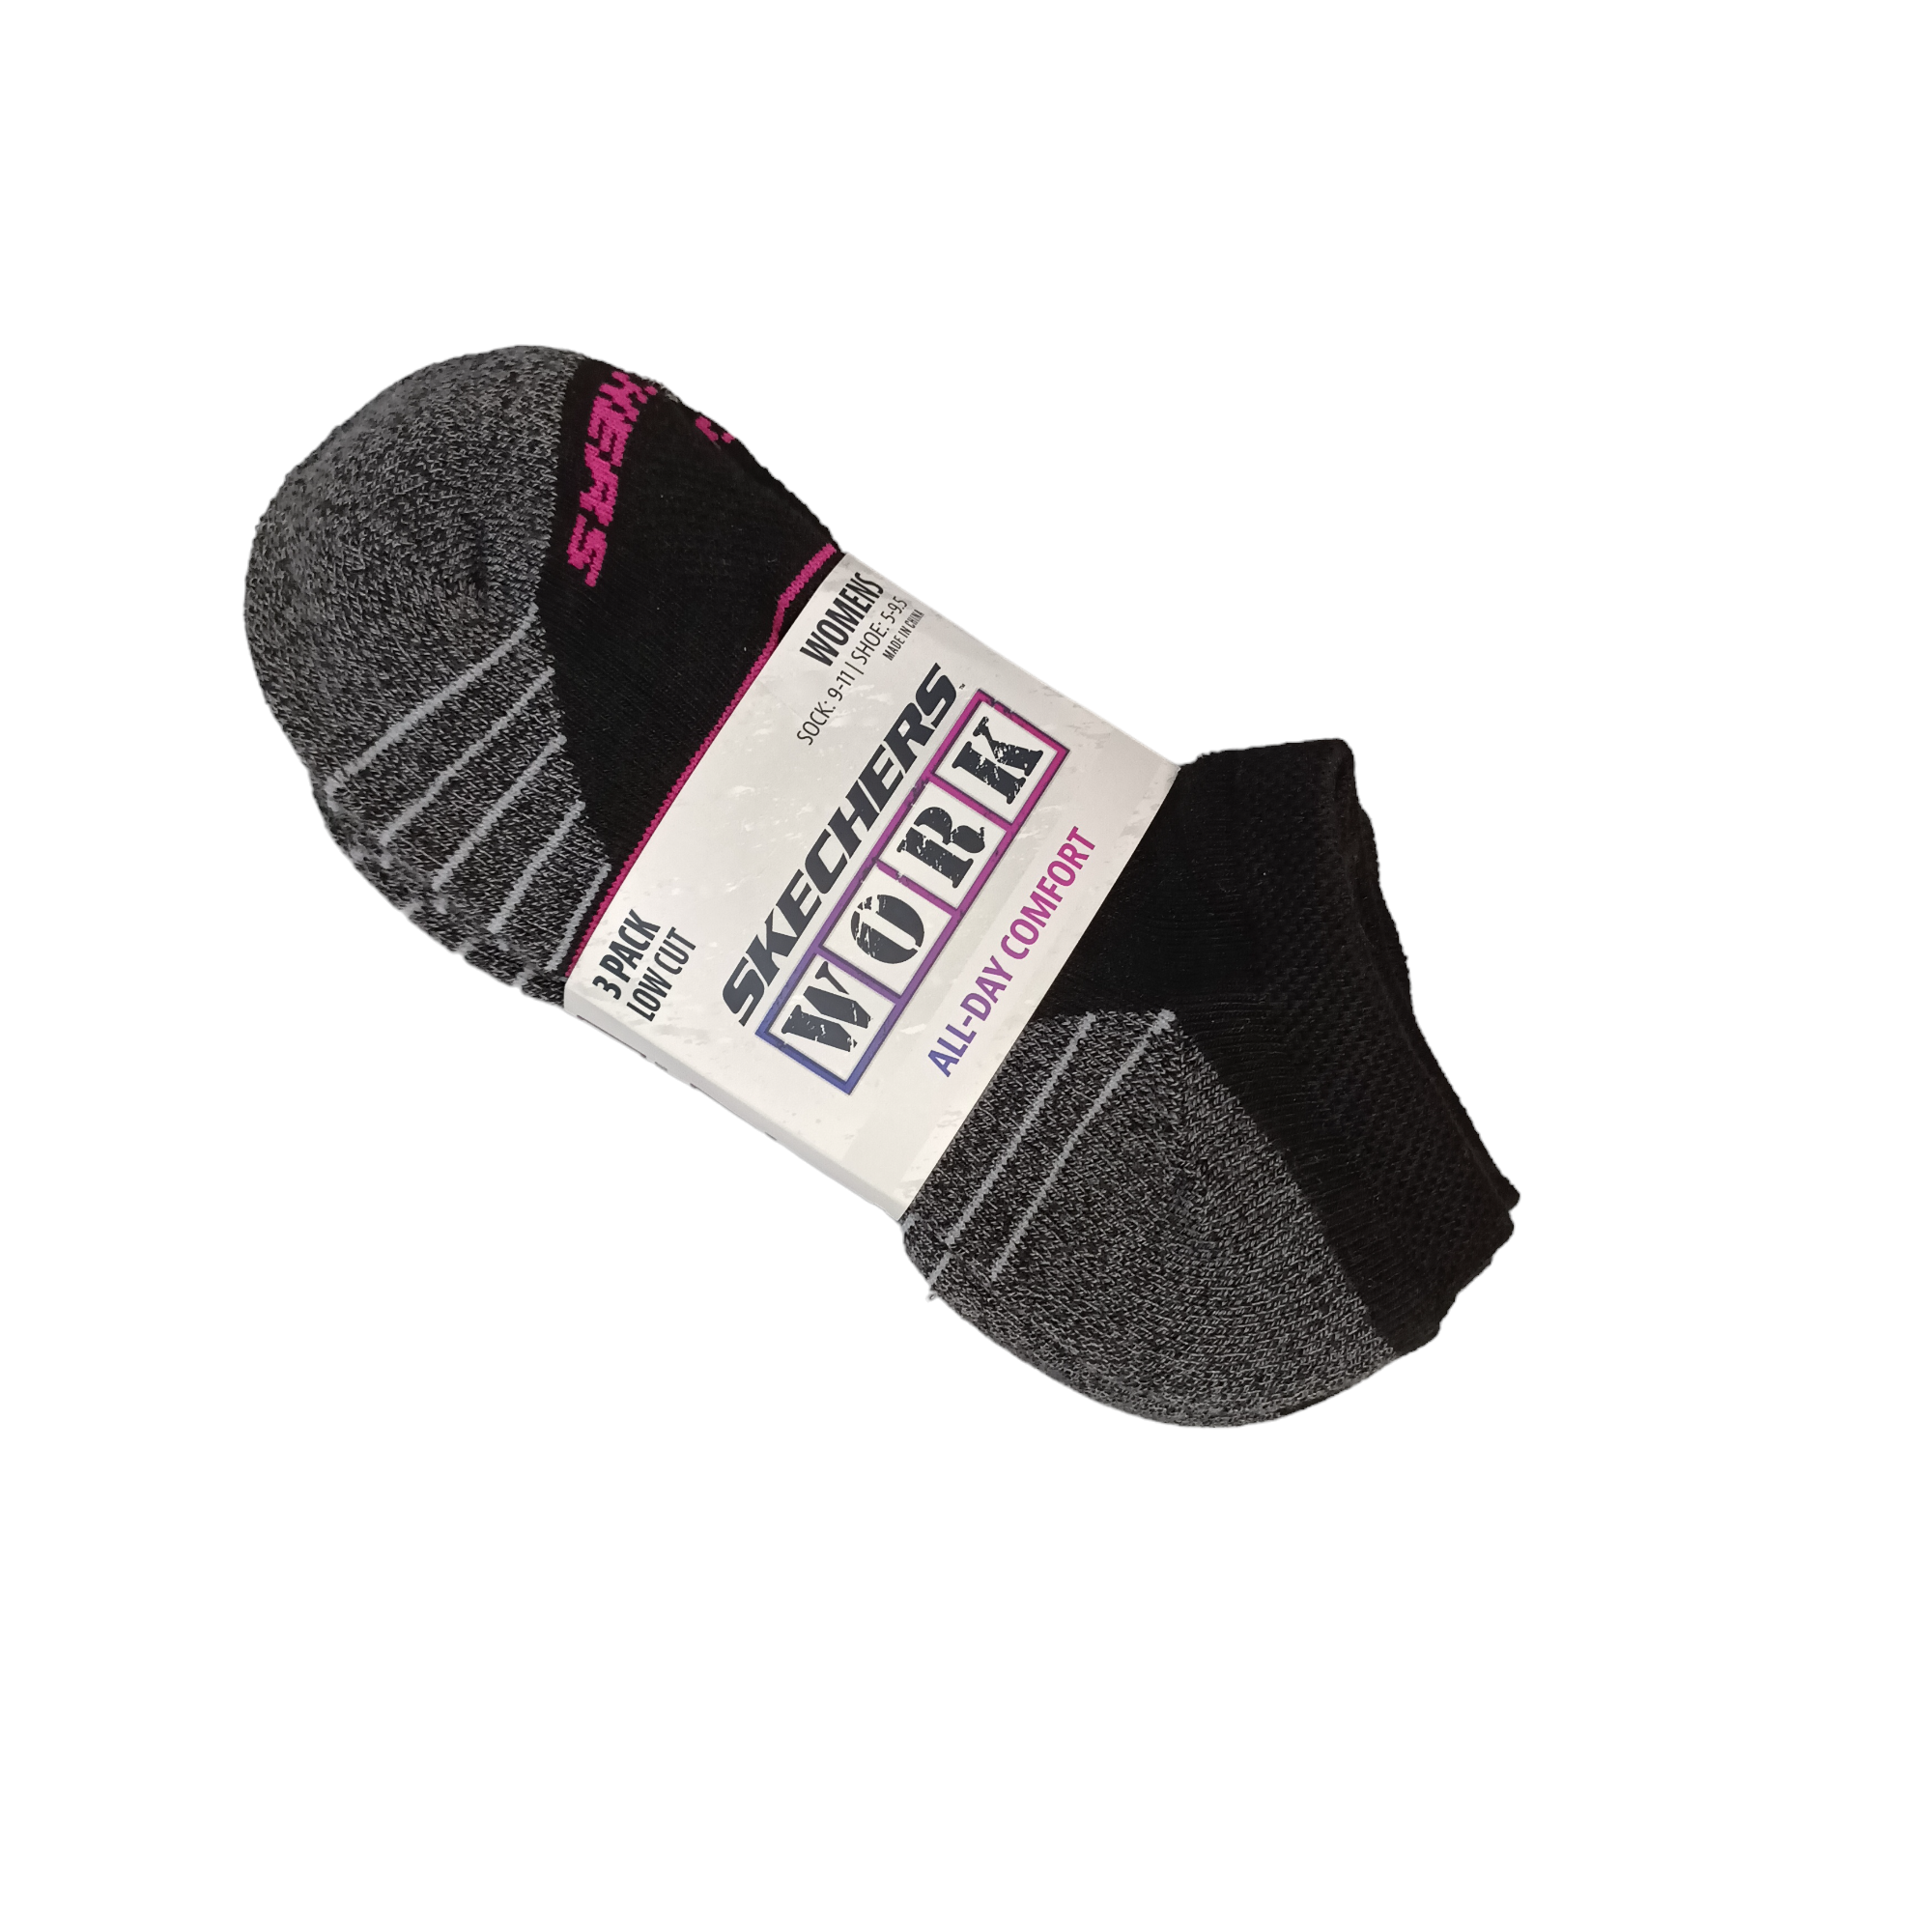 Extd Terry low Sock 3pk - shoe&amp;me - Skechers - Socks - Socks, Womens